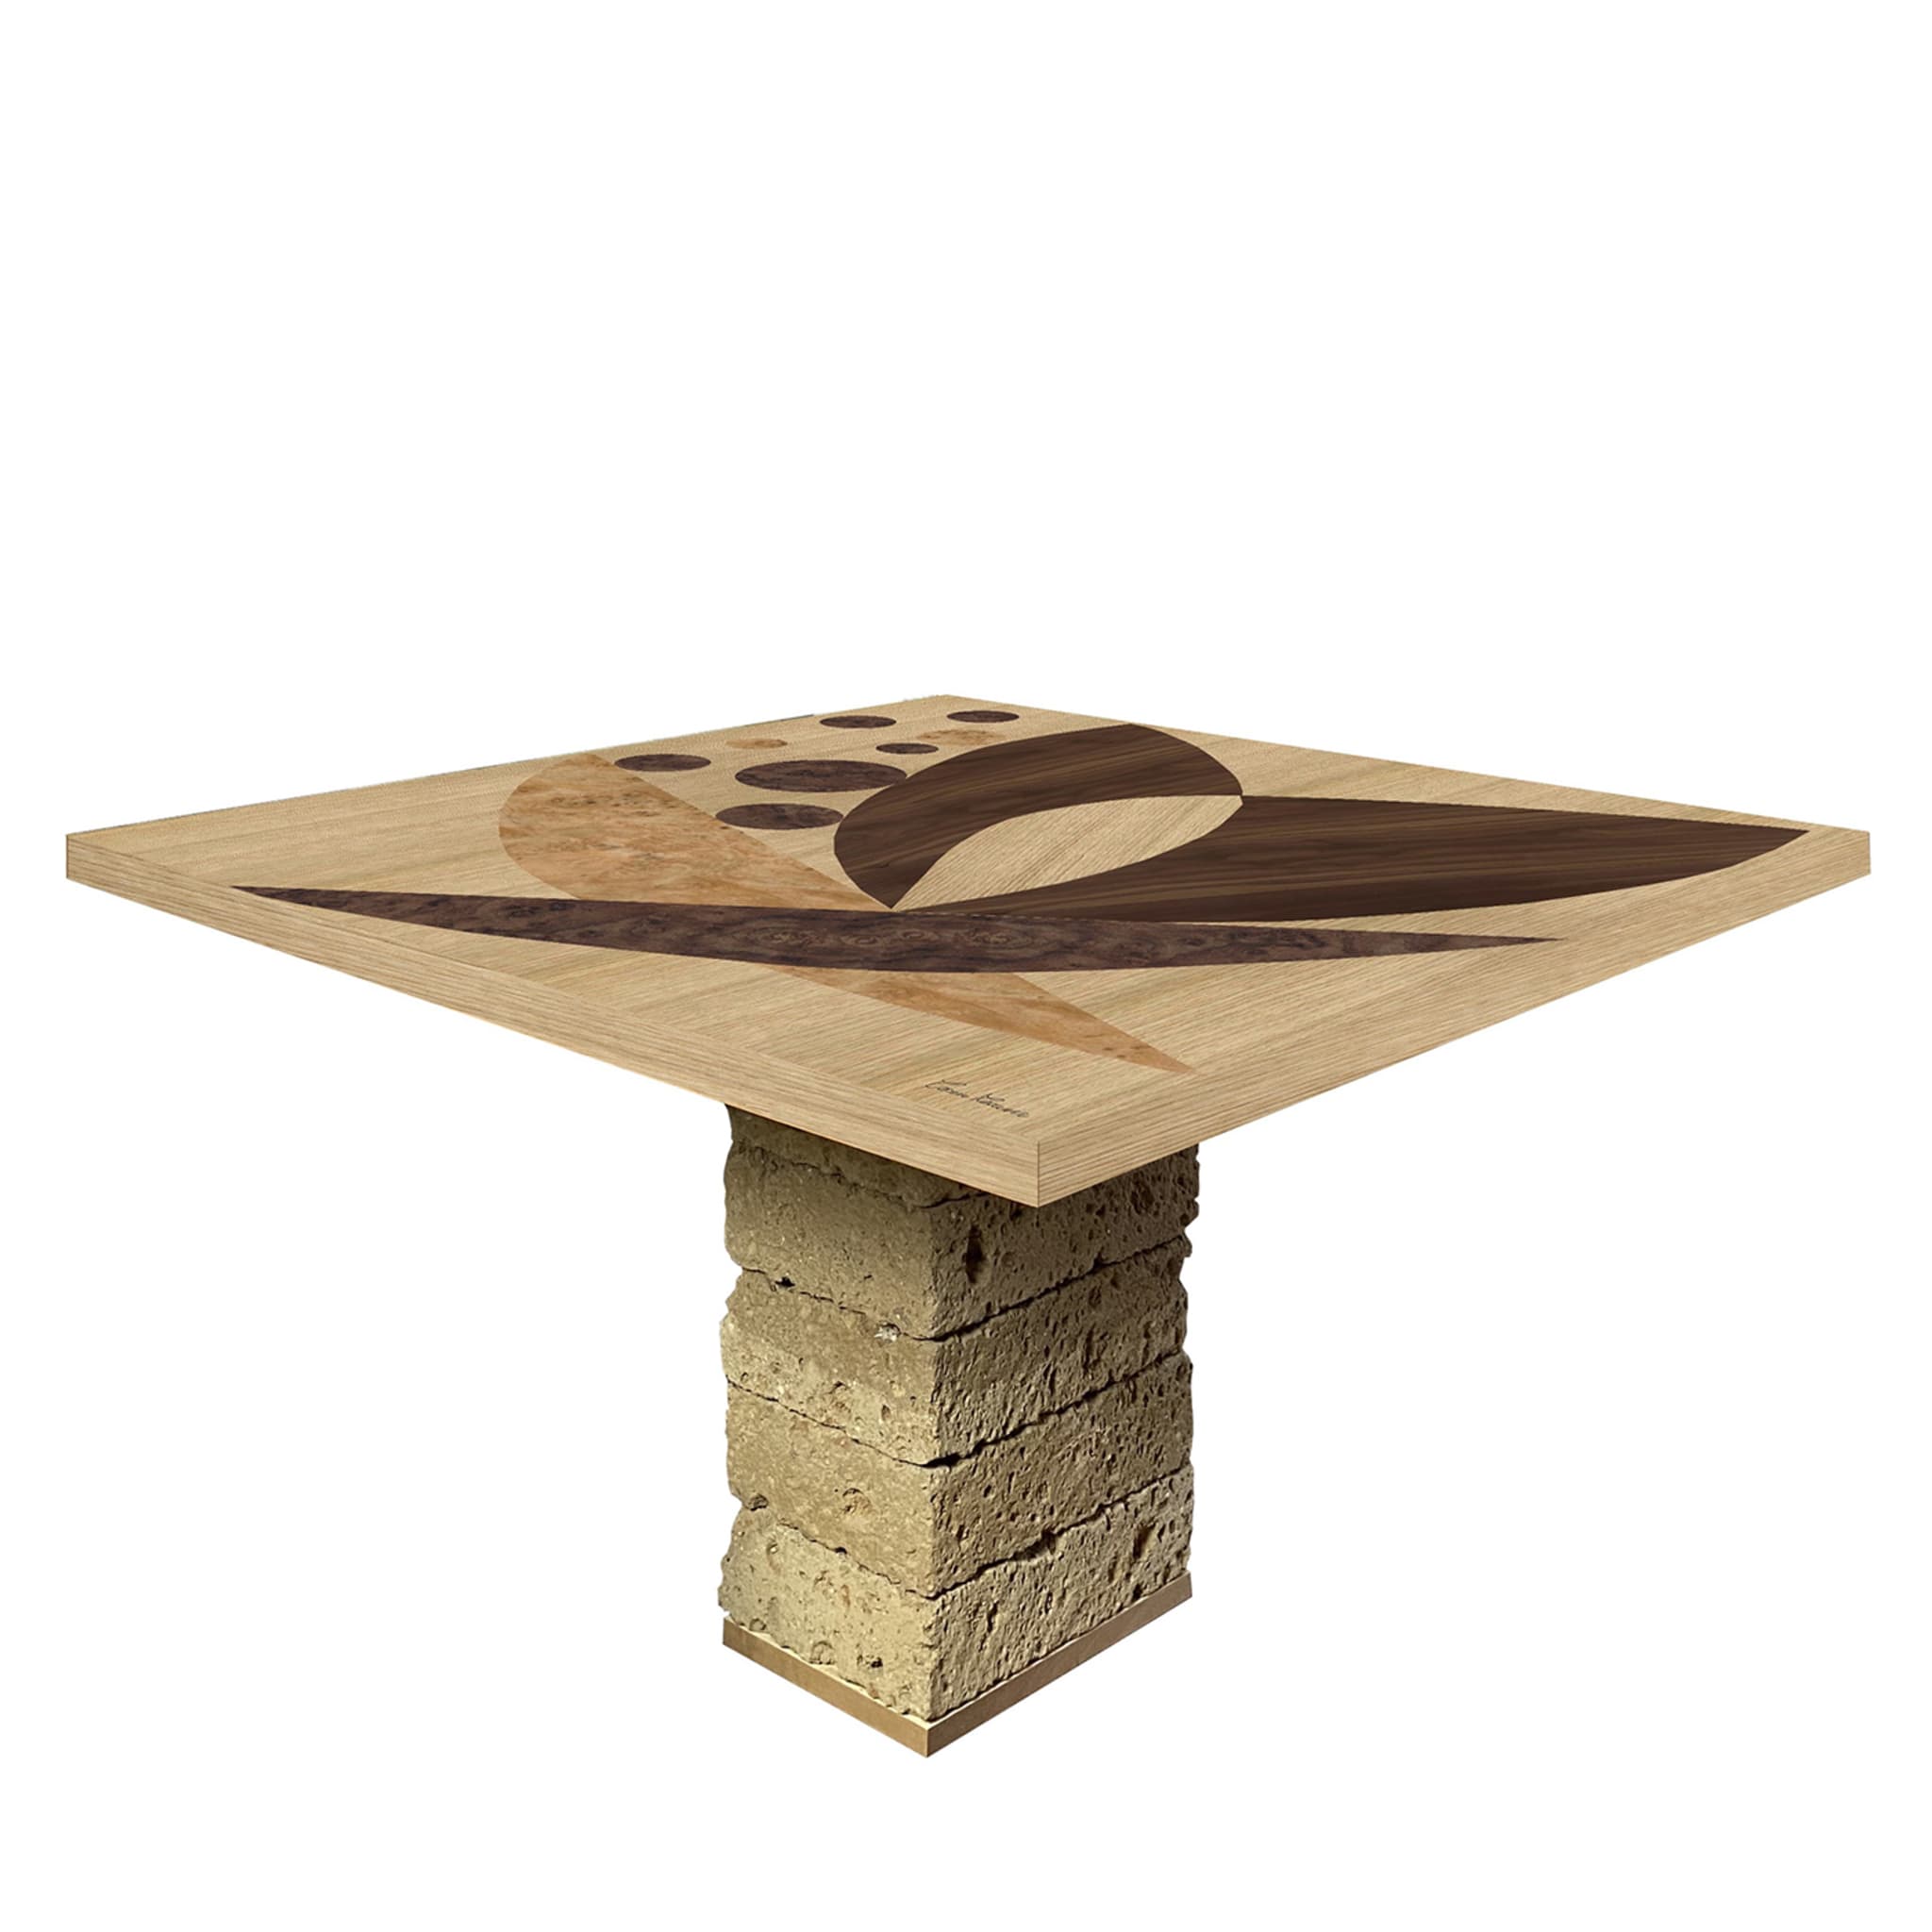 Tarsia Tables Tt8 Table carrée polychrome par Mascia Meccani - Vue alternative 2